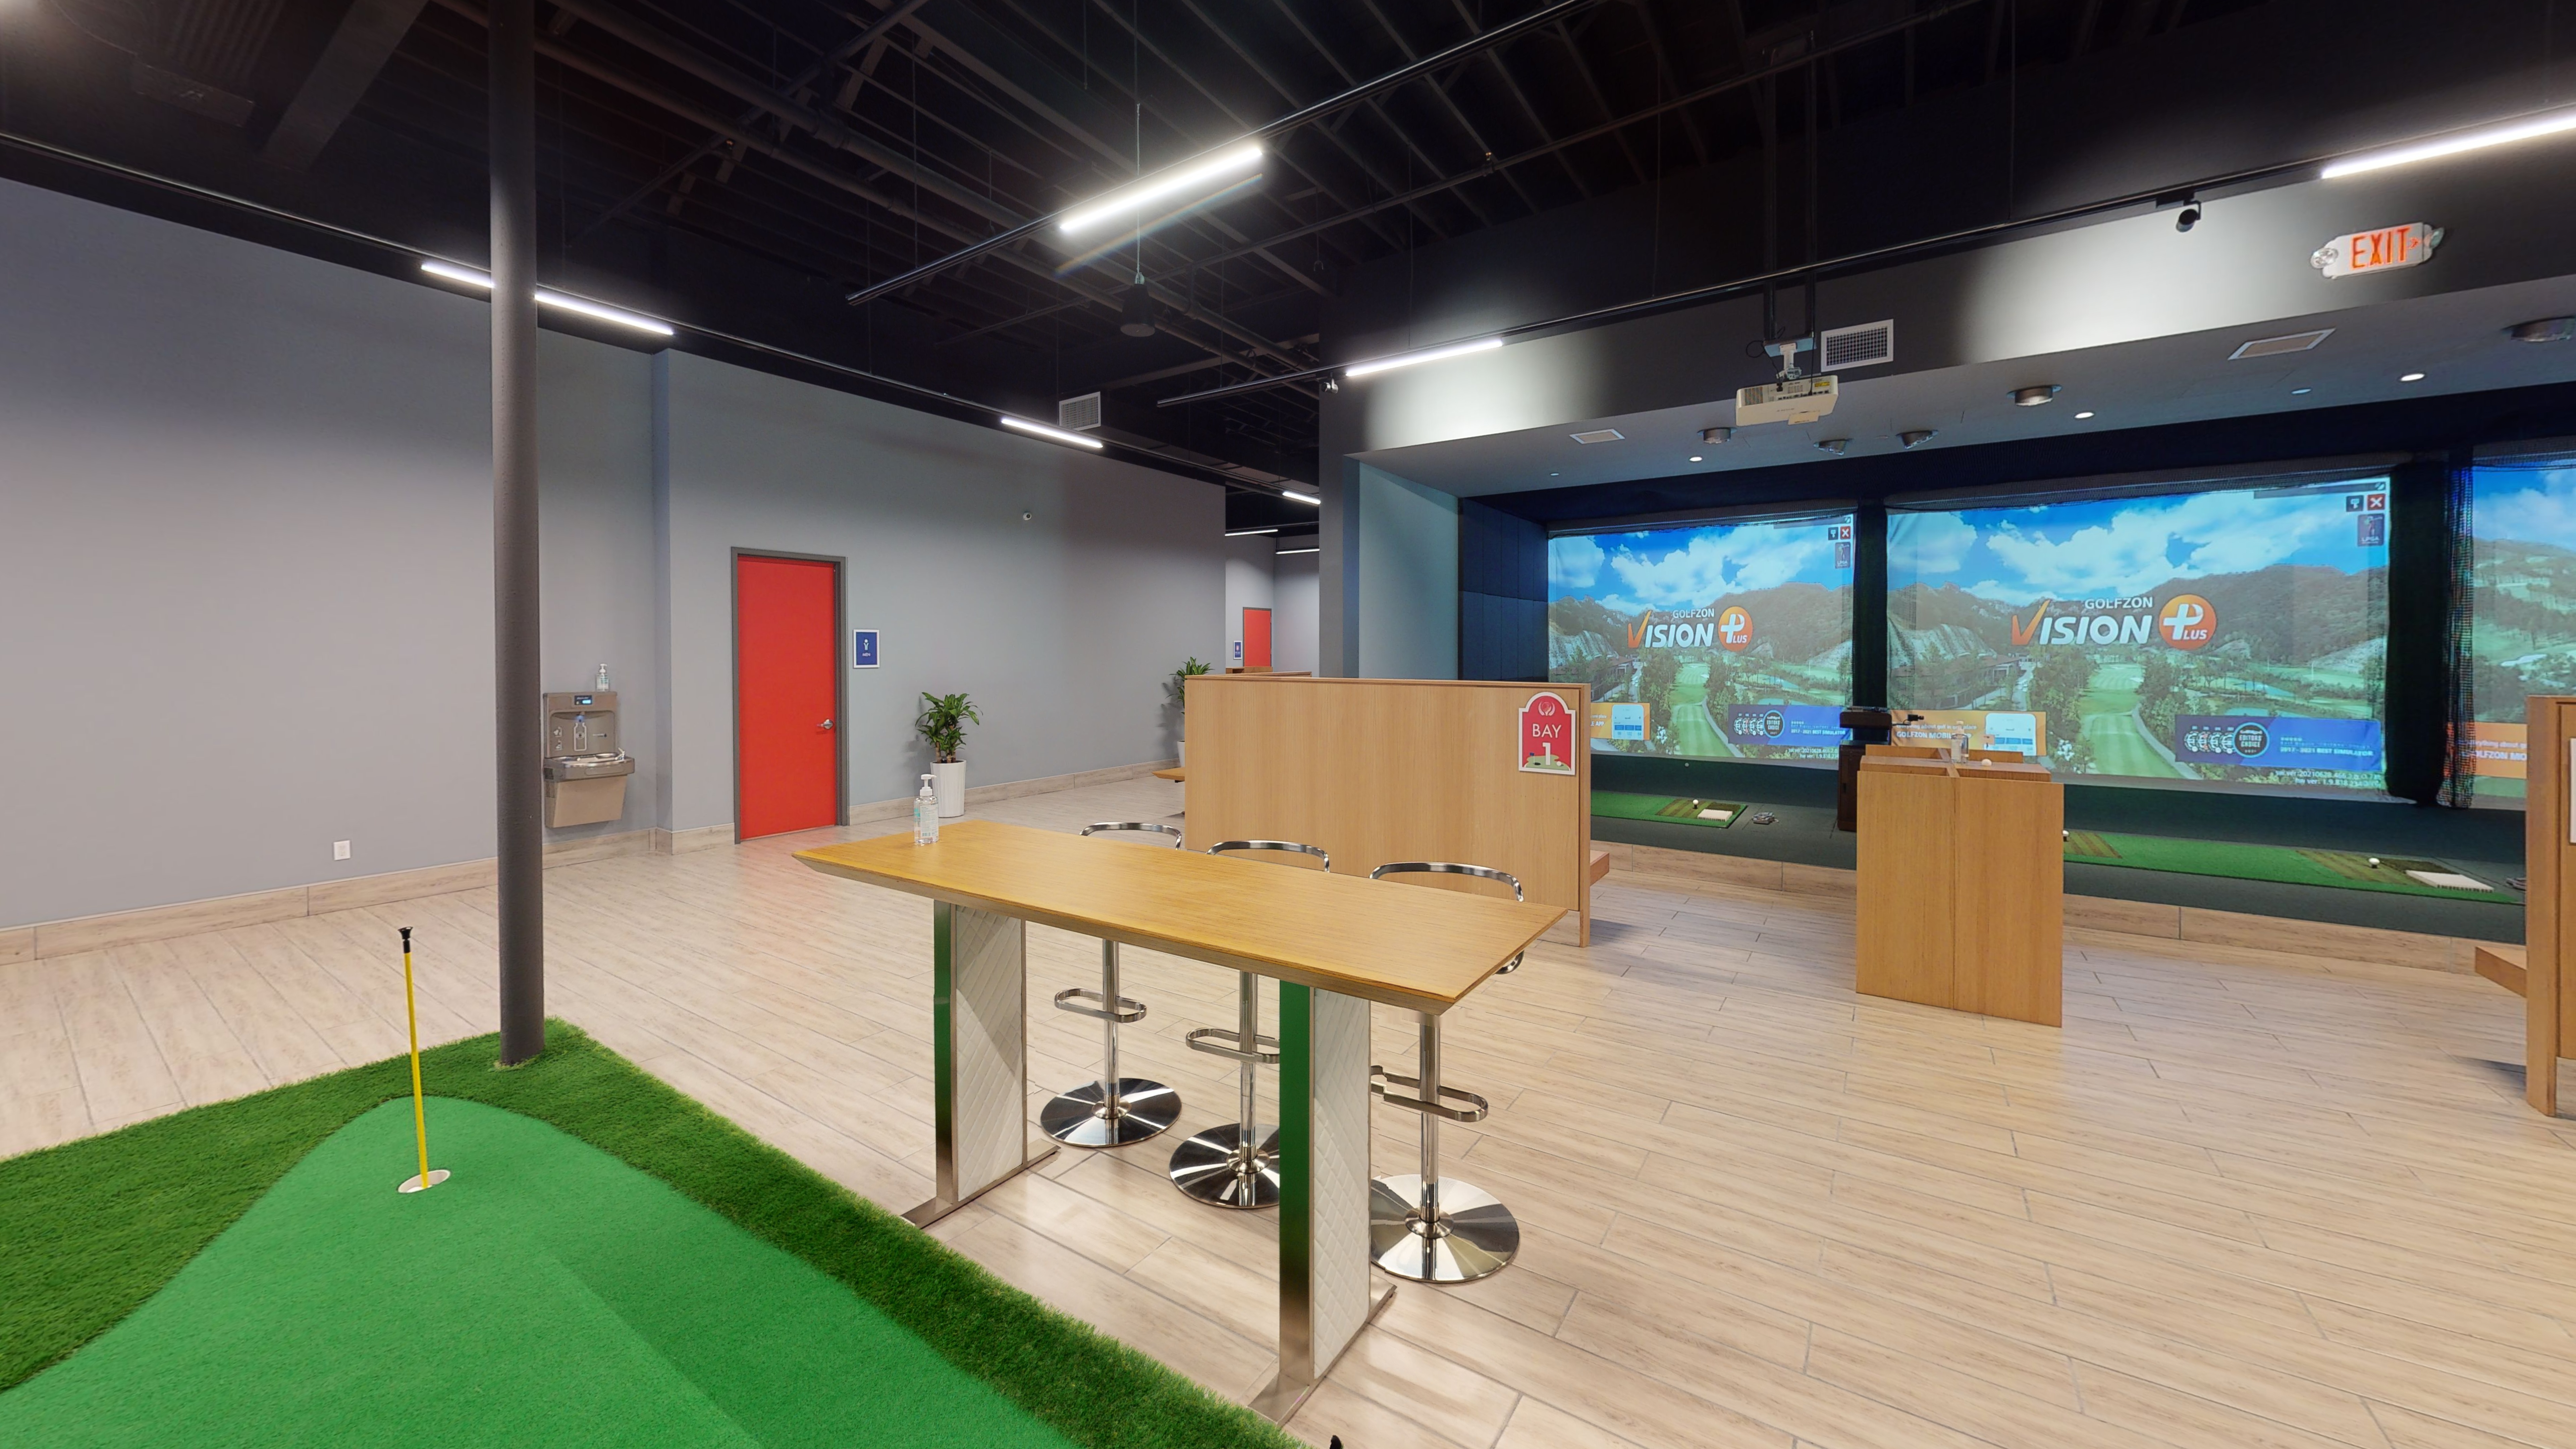 Golfzon simulator setup inside a basement for design ideas